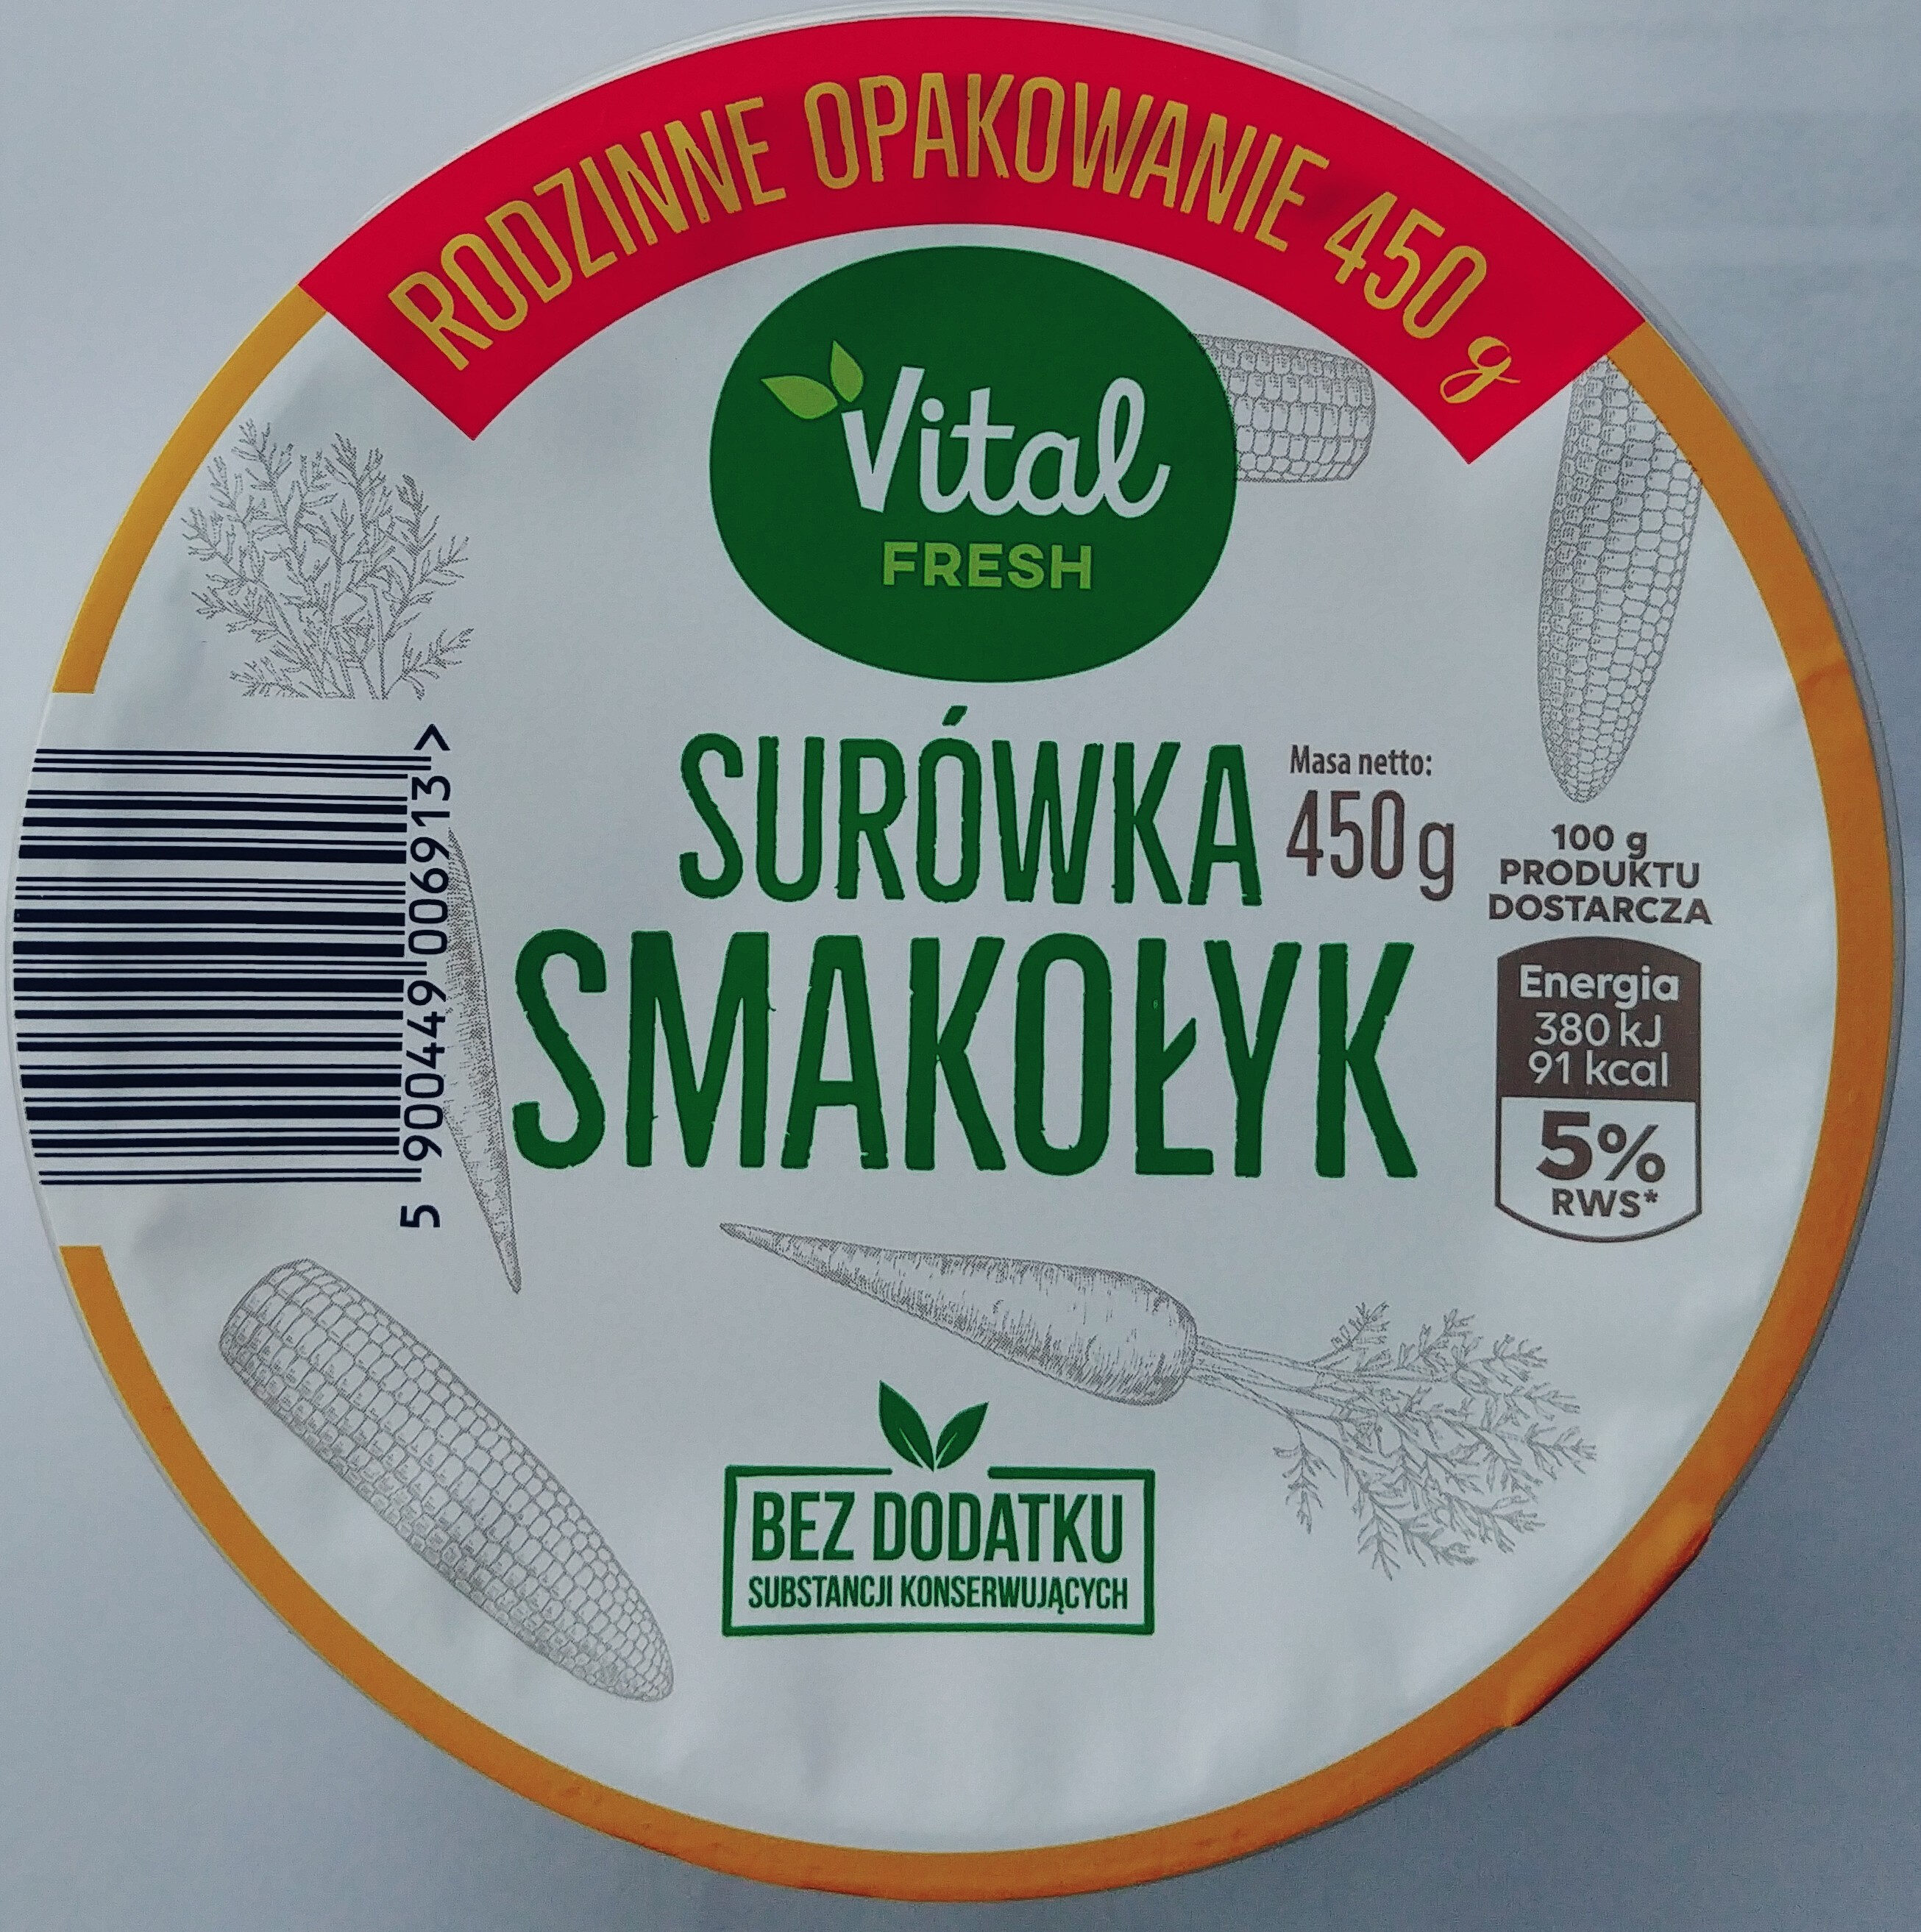 Surówka Smakołyk - Product - pl